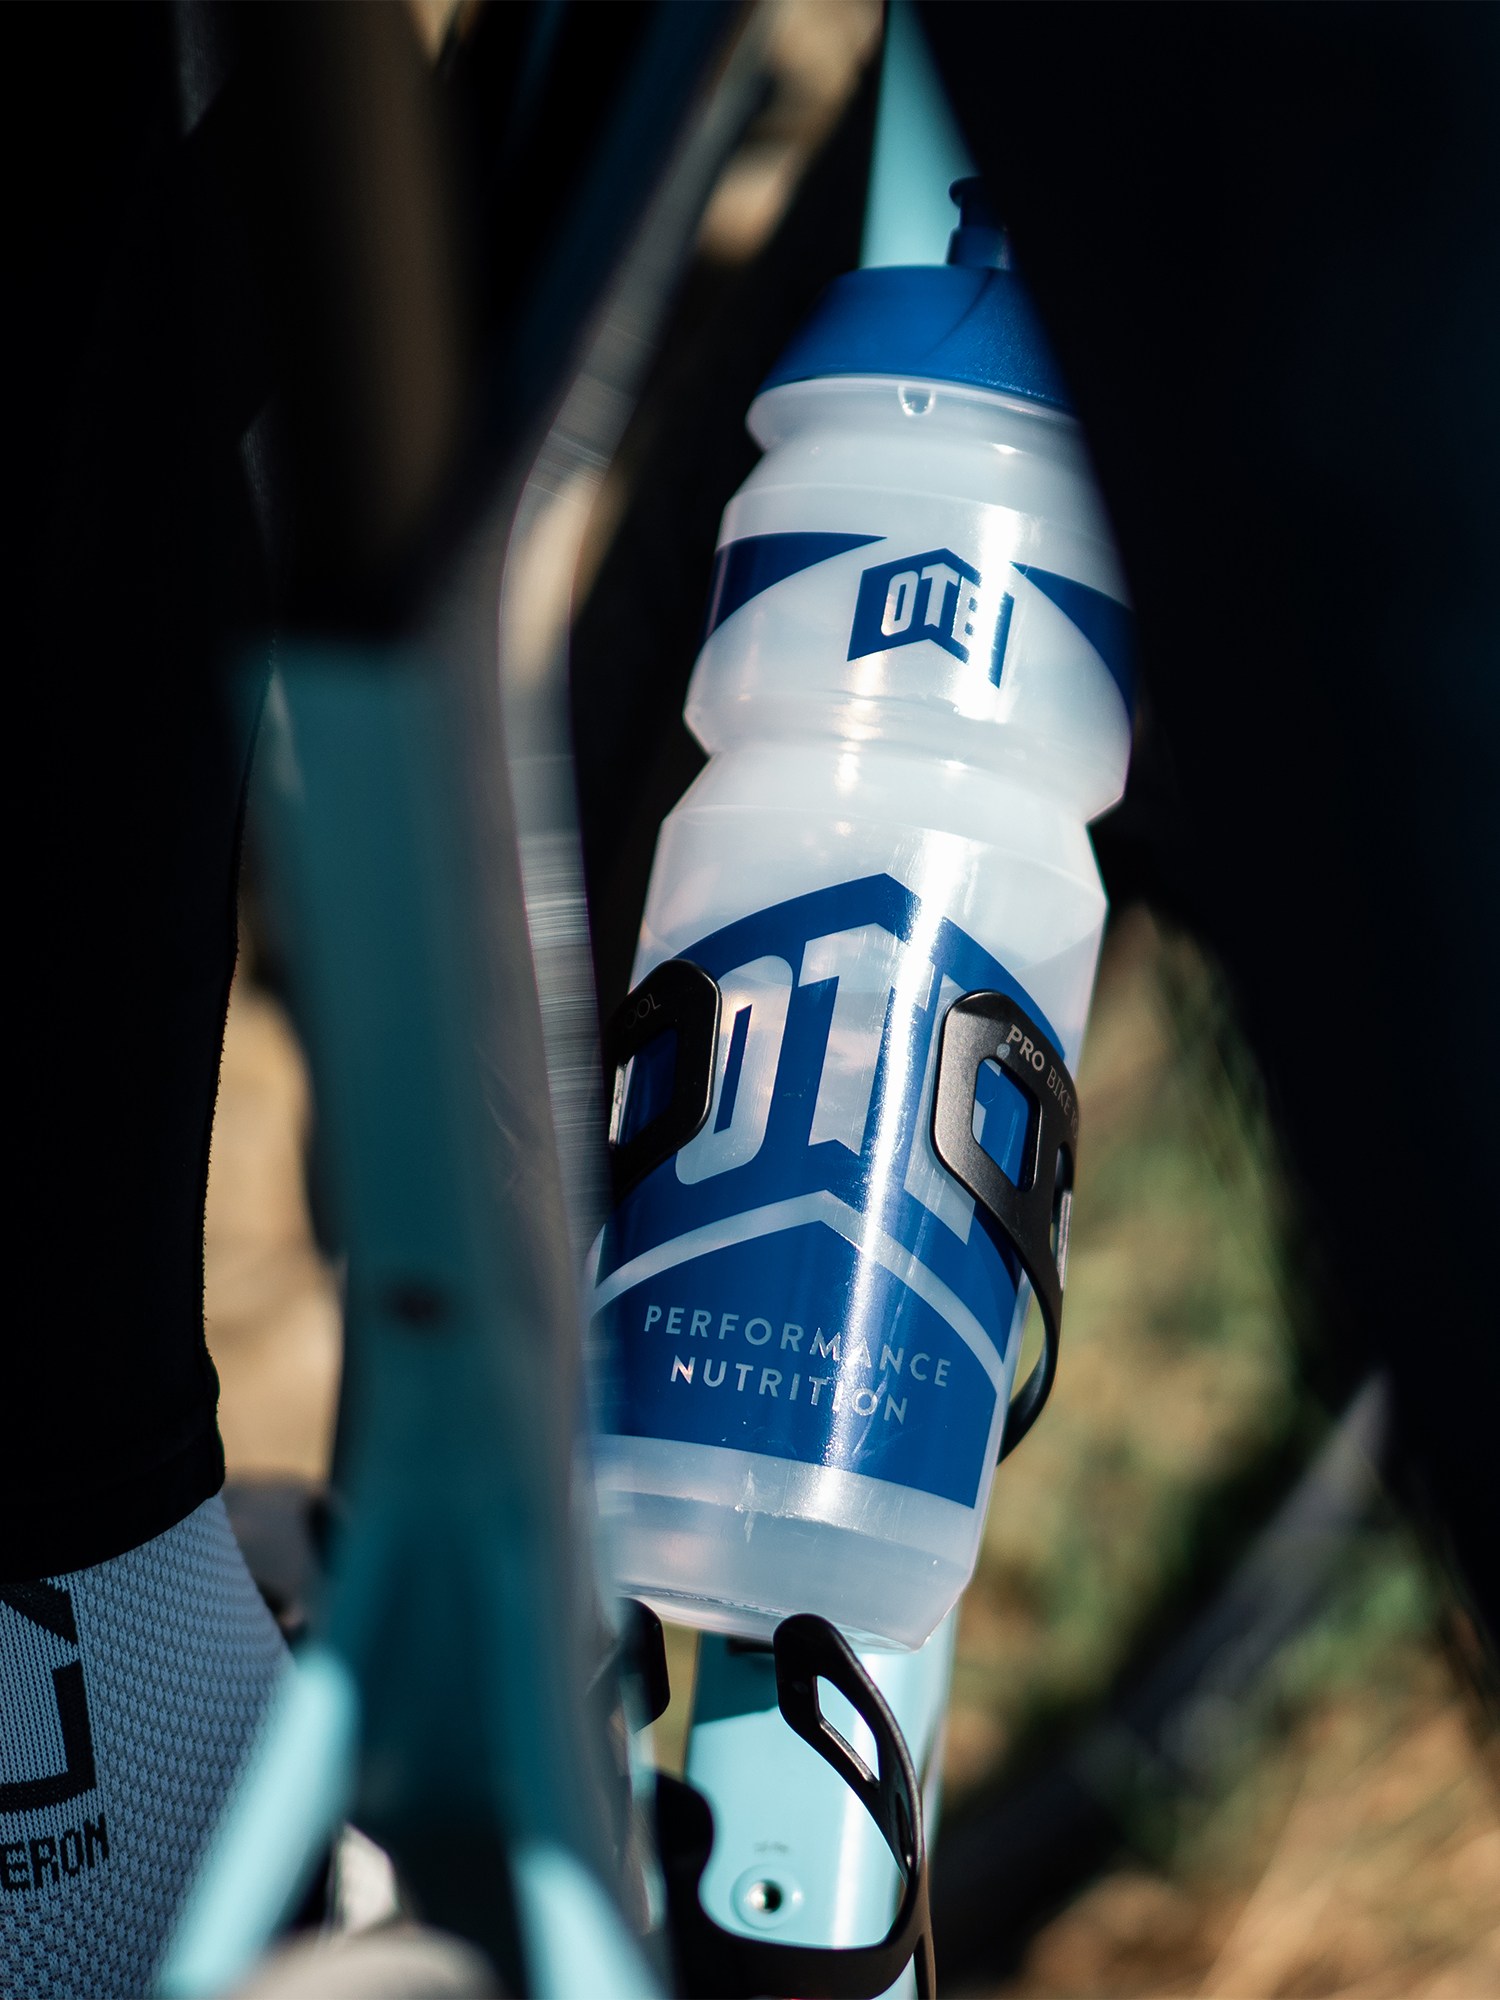 OTE Blue Drinks Bottle 750ml — OTE Sports